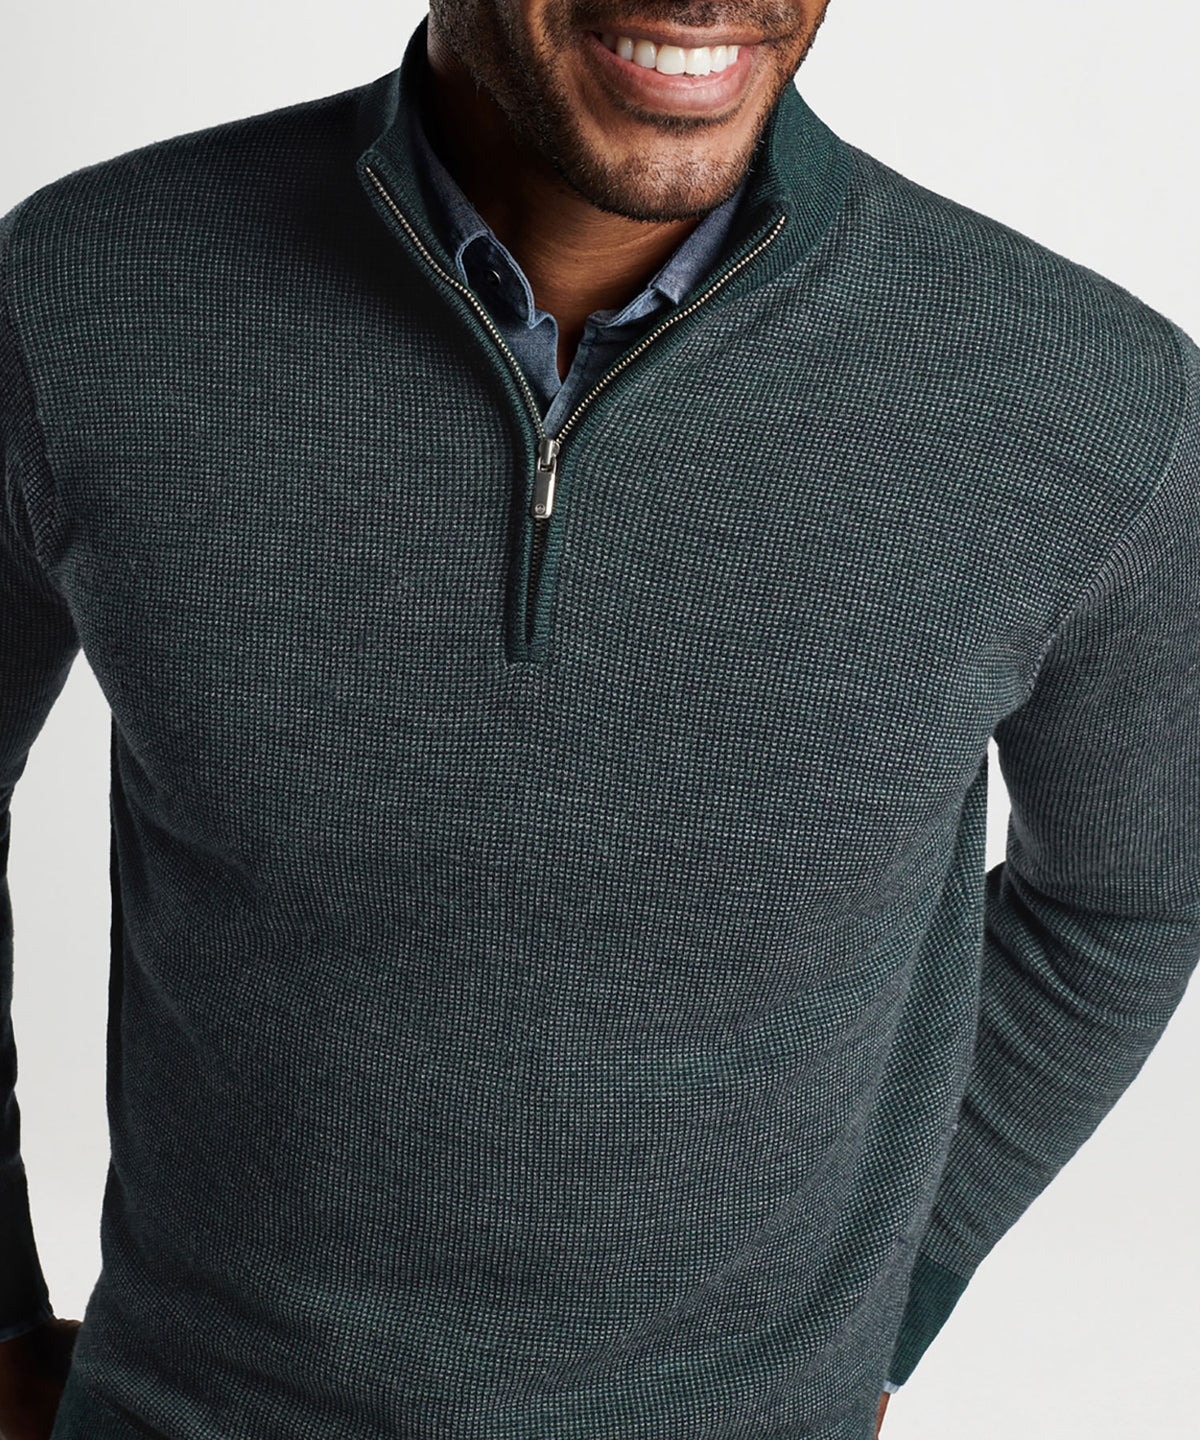 Peter Millar Breaker Birdseye Quarter-Zip Sweater, Men's Big & Tall